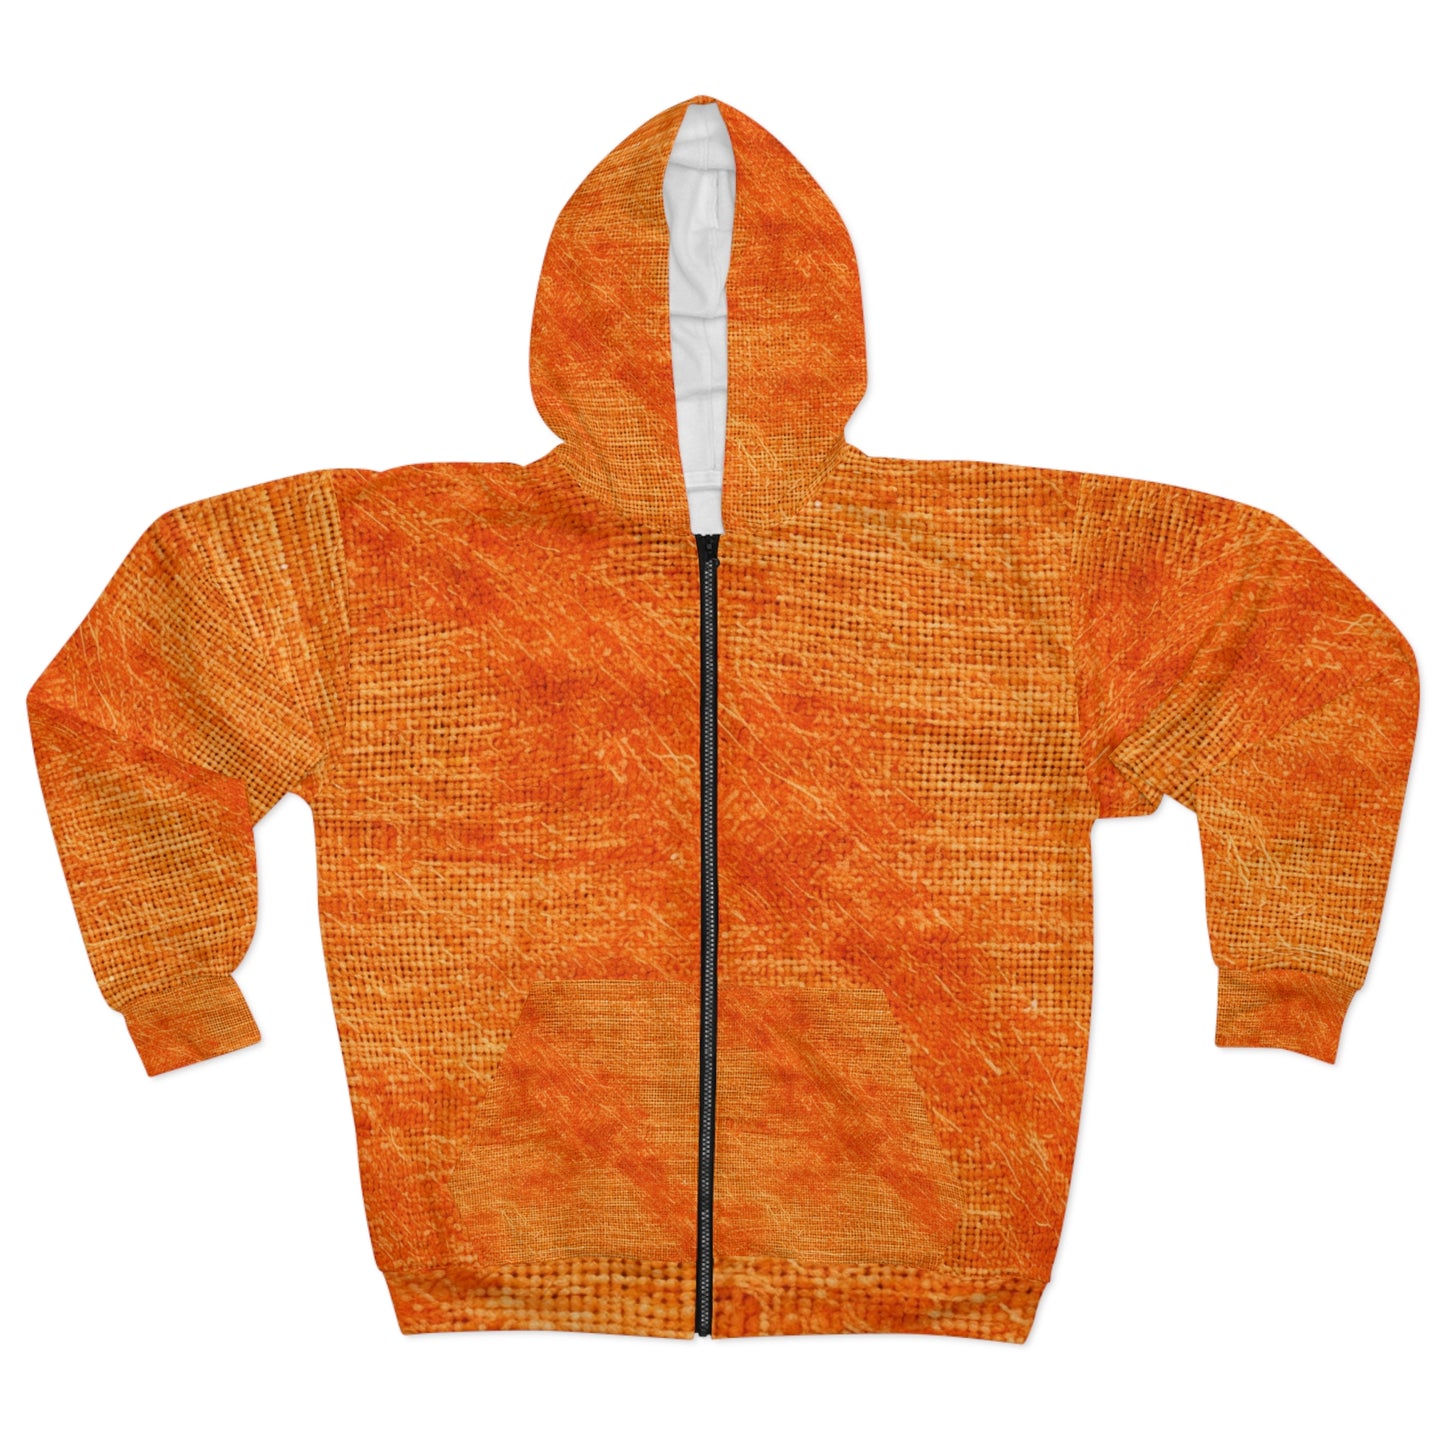 Burnt Orange/Rust: Denim-Inspired Autumn Fall Color Fabric - Unisex Zip Hoodie (AOP)